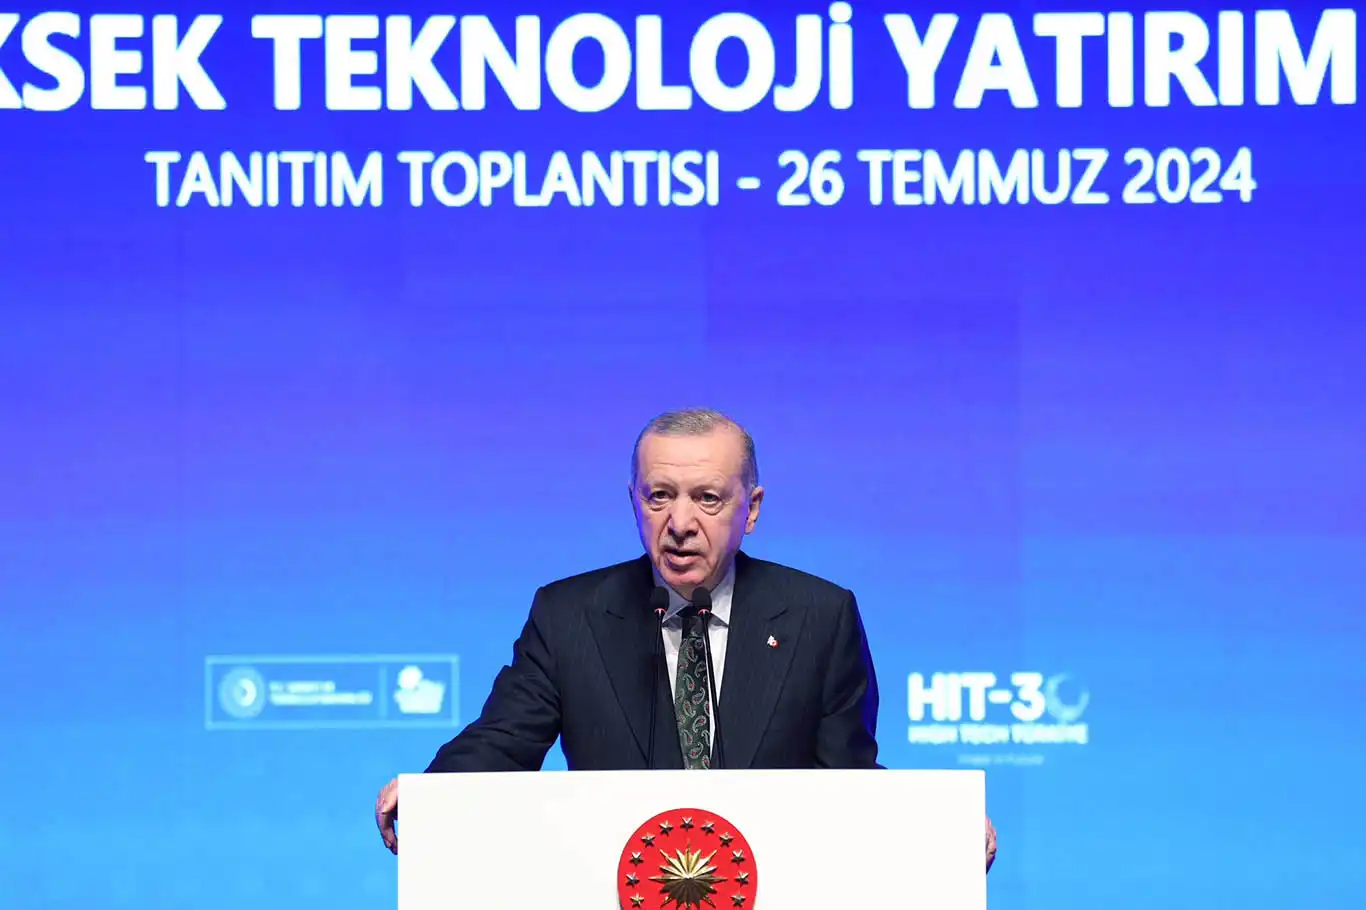 Turkish President Erdogan slams US Congress for applauding Netanyahu’s speech